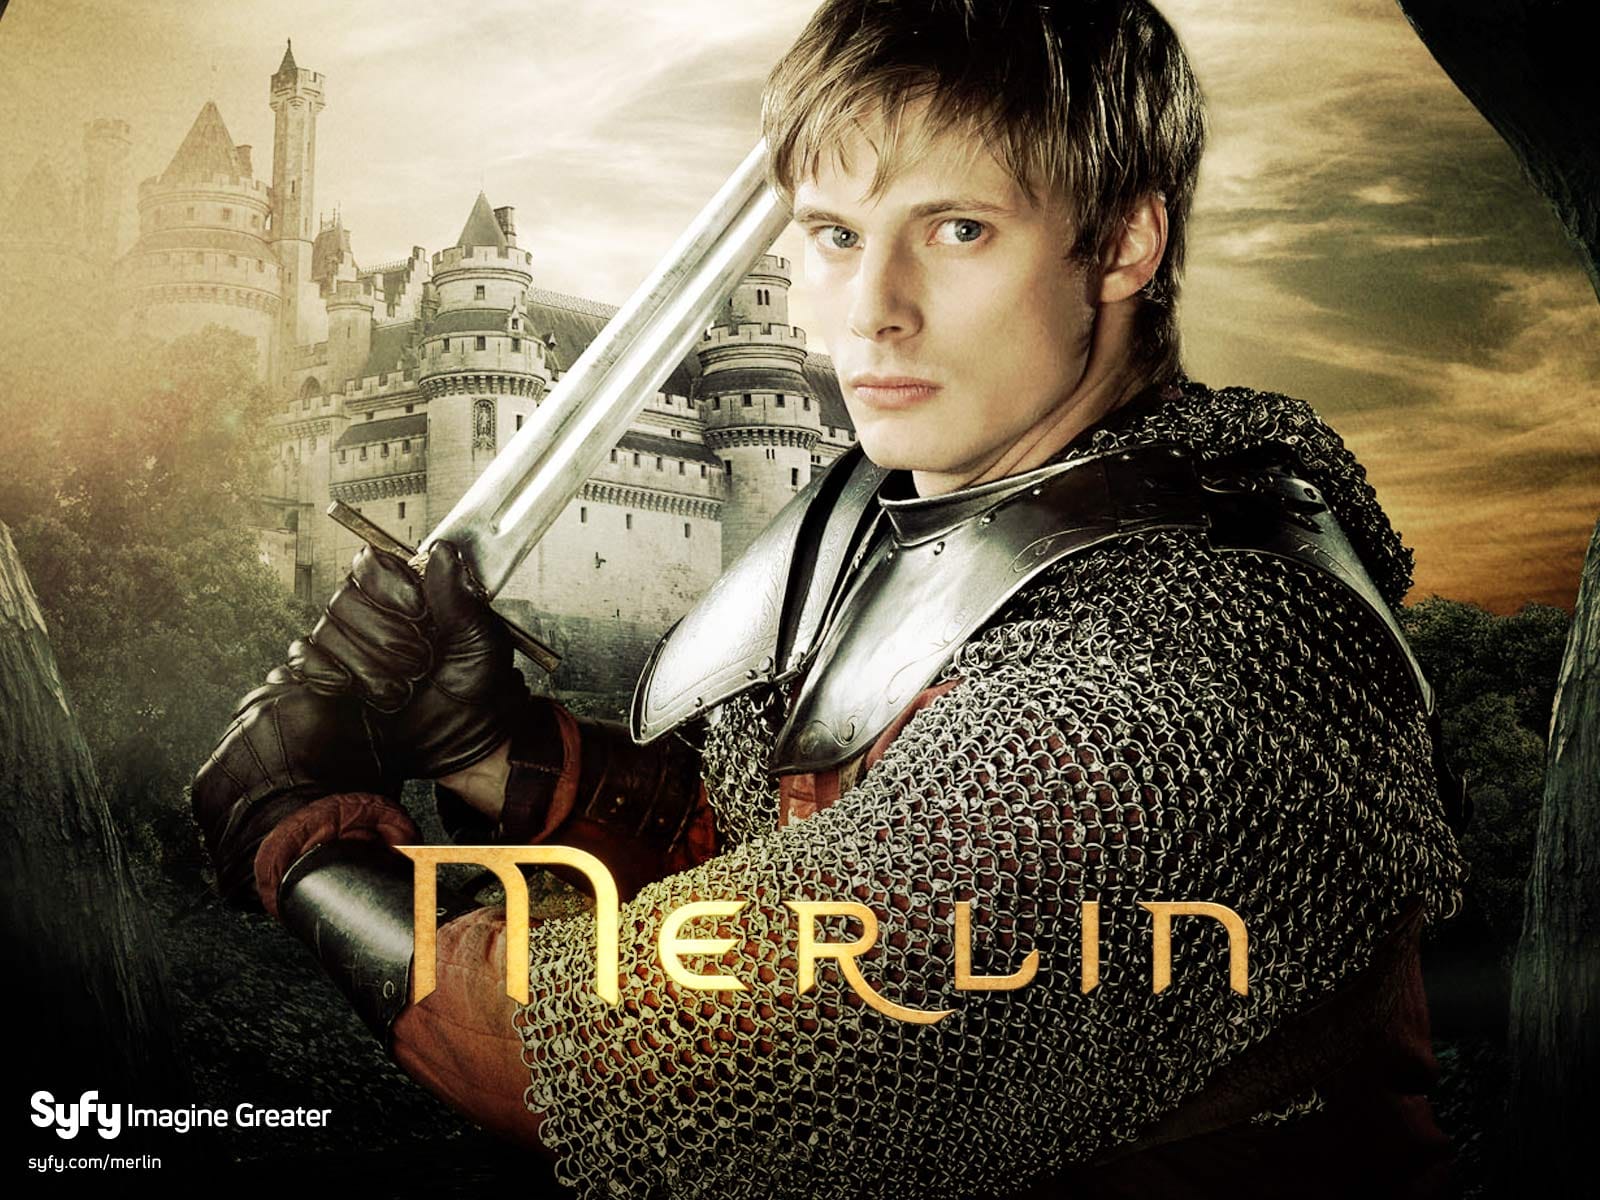 Merlin Rankings & Opinions